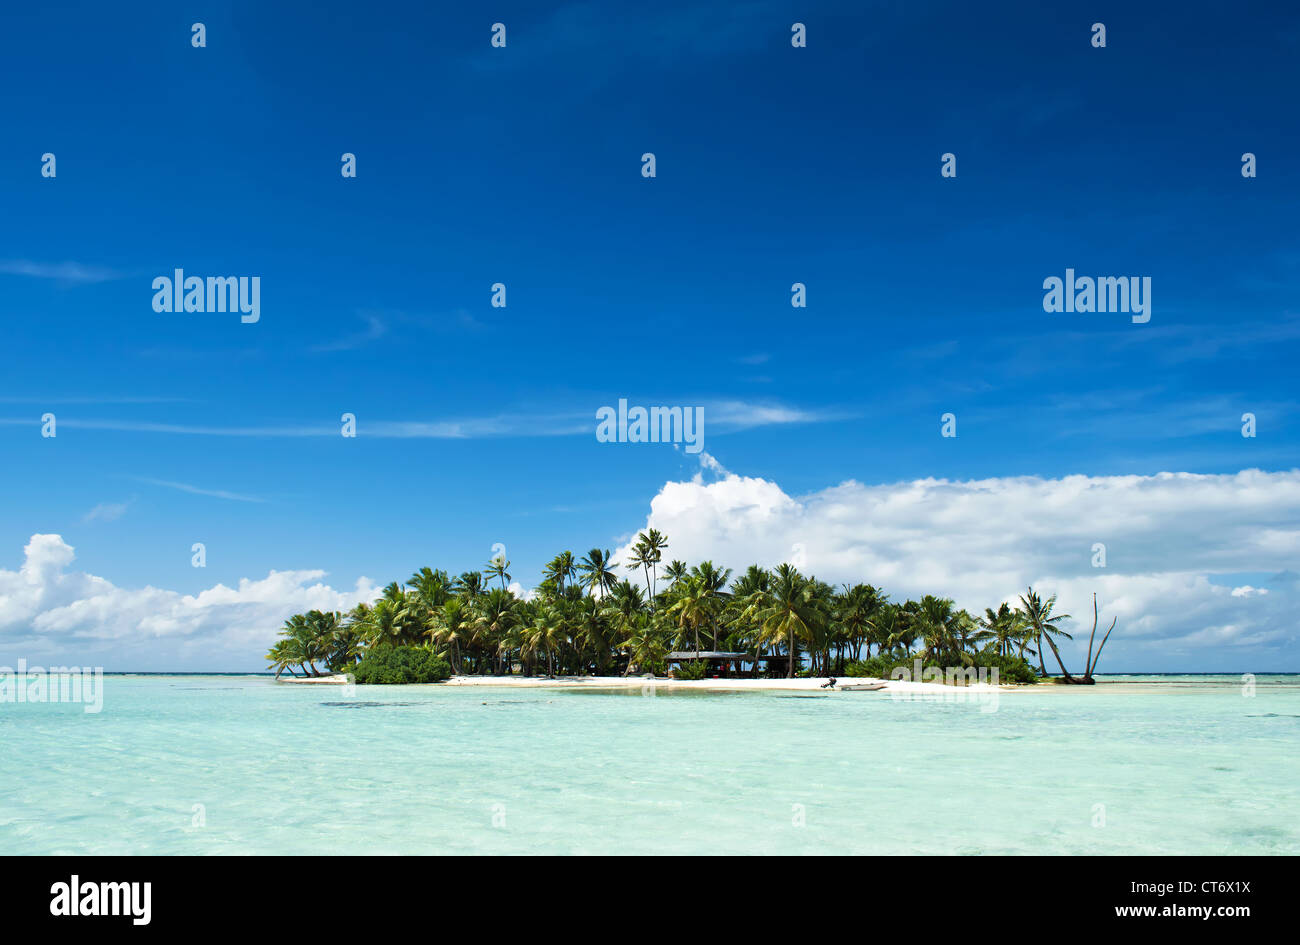 Disabitata o isola deserta in laguna blu all'interno di Rangiroa Atoll, un'isola vicino a Tahiti in Polinesia francese. Foto Stock